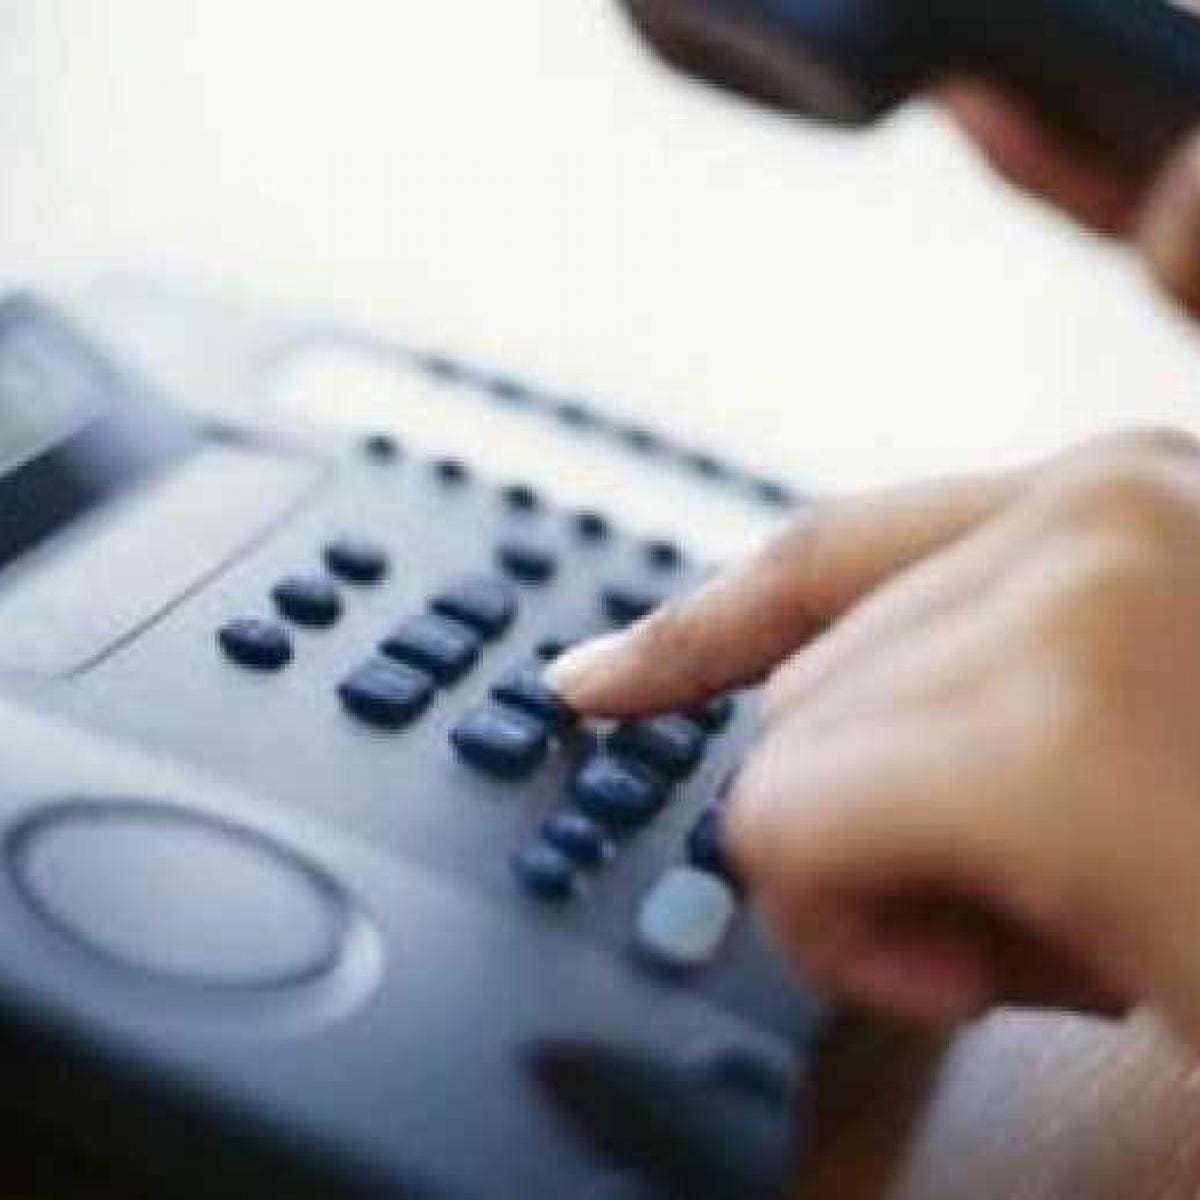 Mποδοσάκειο Νοσοκομείο Πτολεμαΐδας: Διακοπή τηλεφωνίας λόγω εργασιών